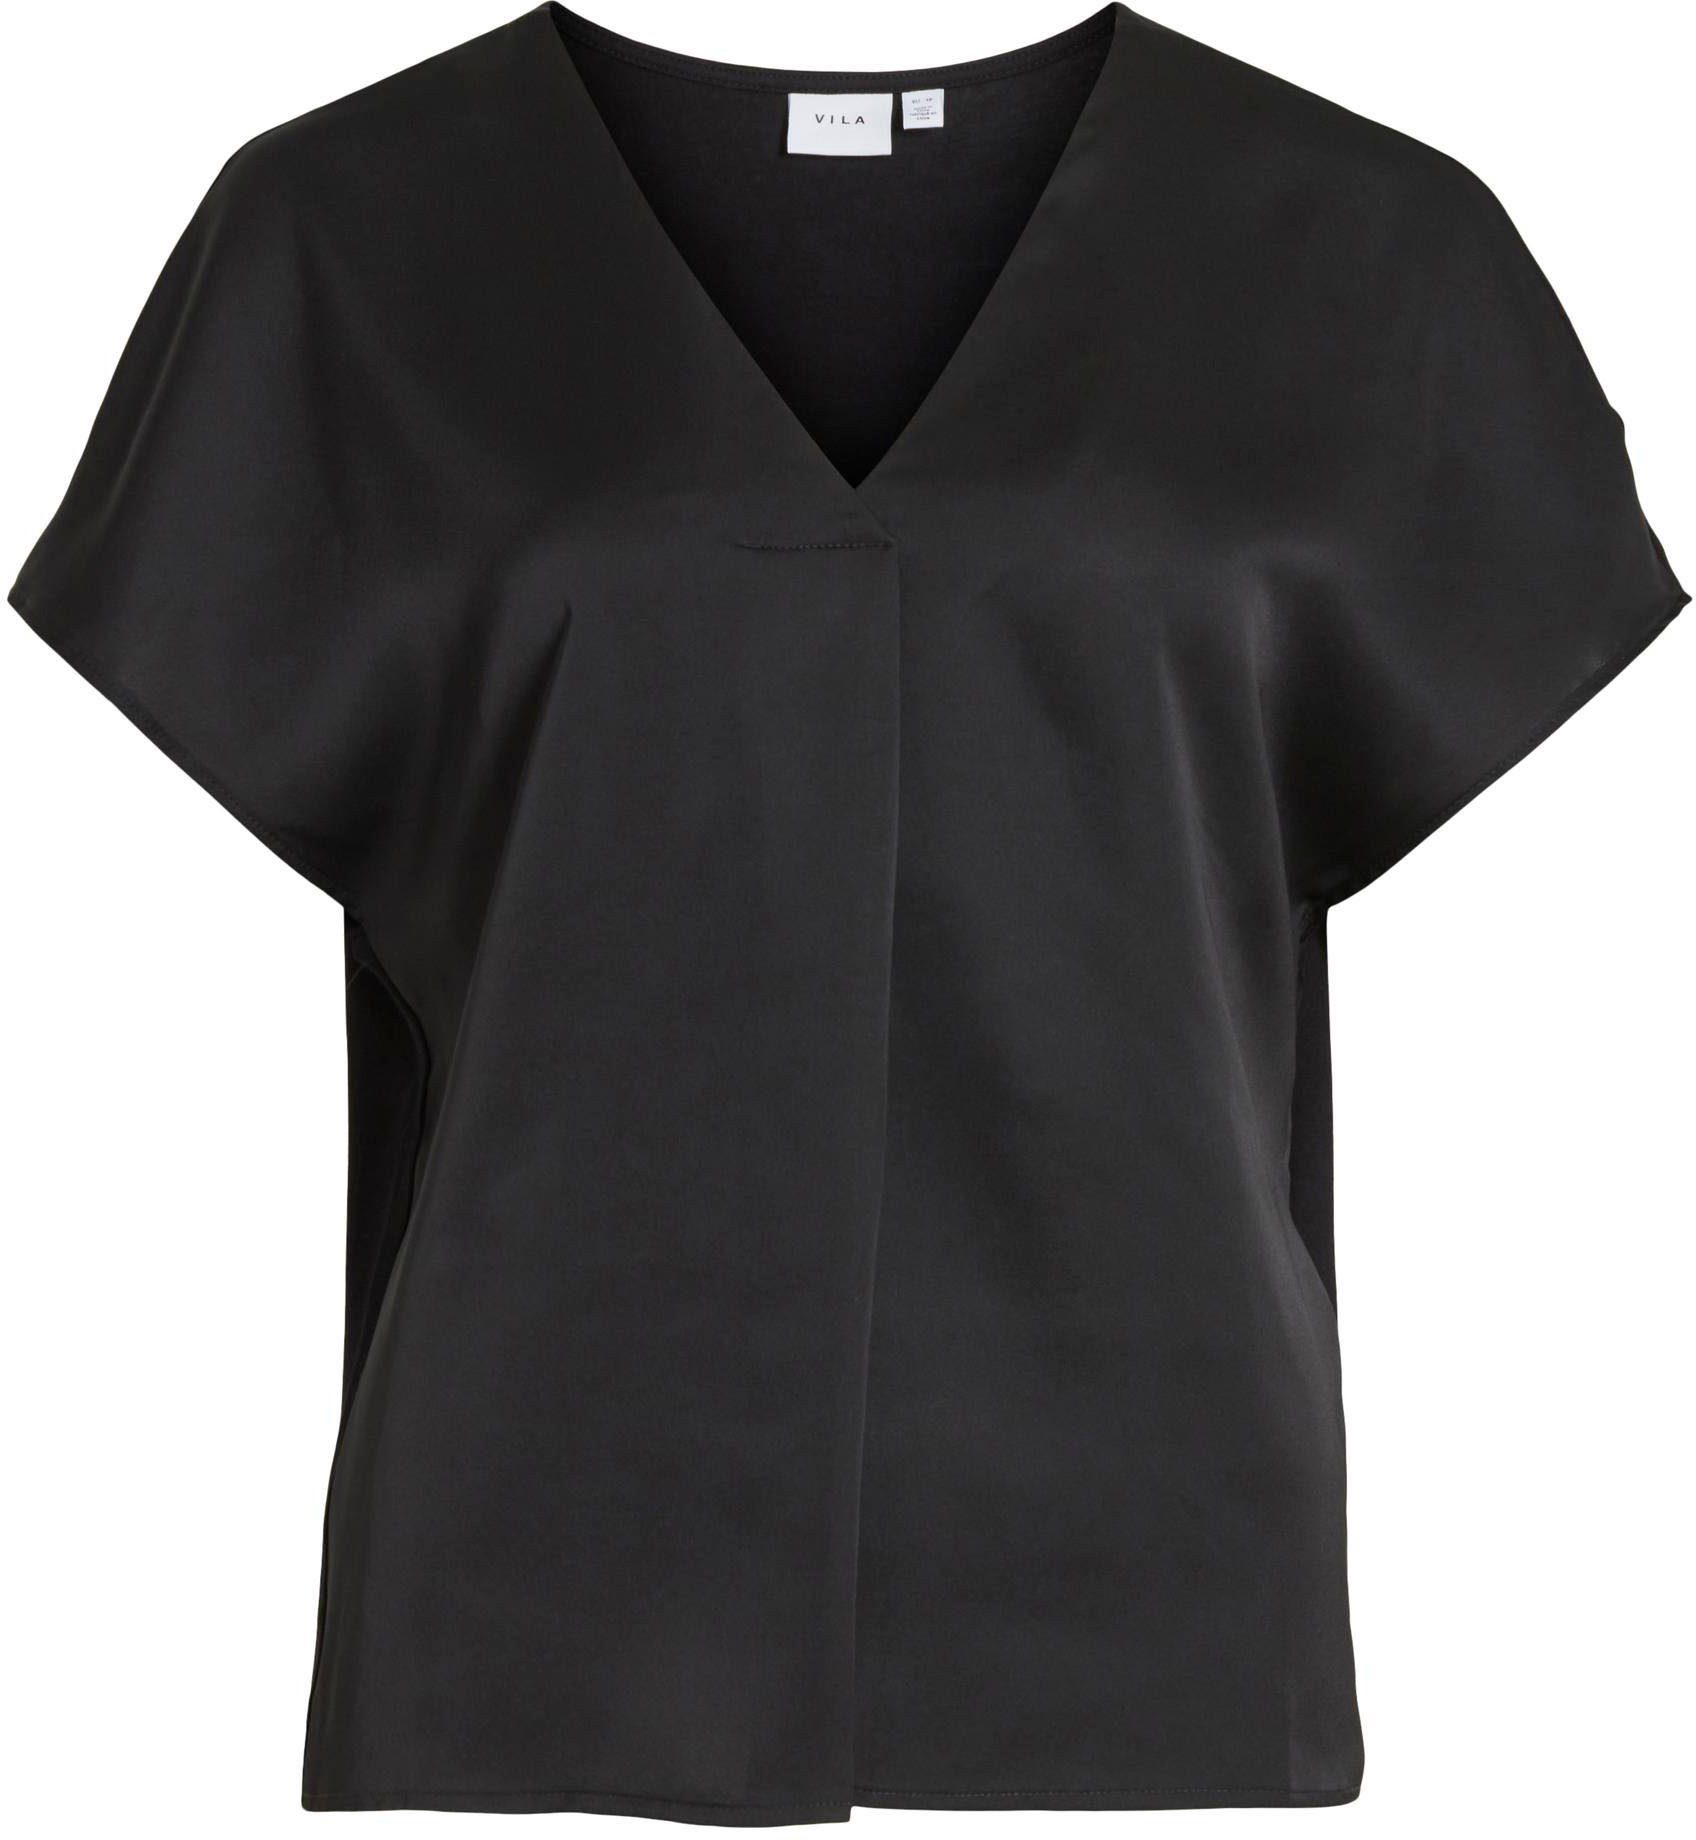 TOP VIELLETTE Vila S/S V-NECK SATIN NOOS - Black V-Shirt